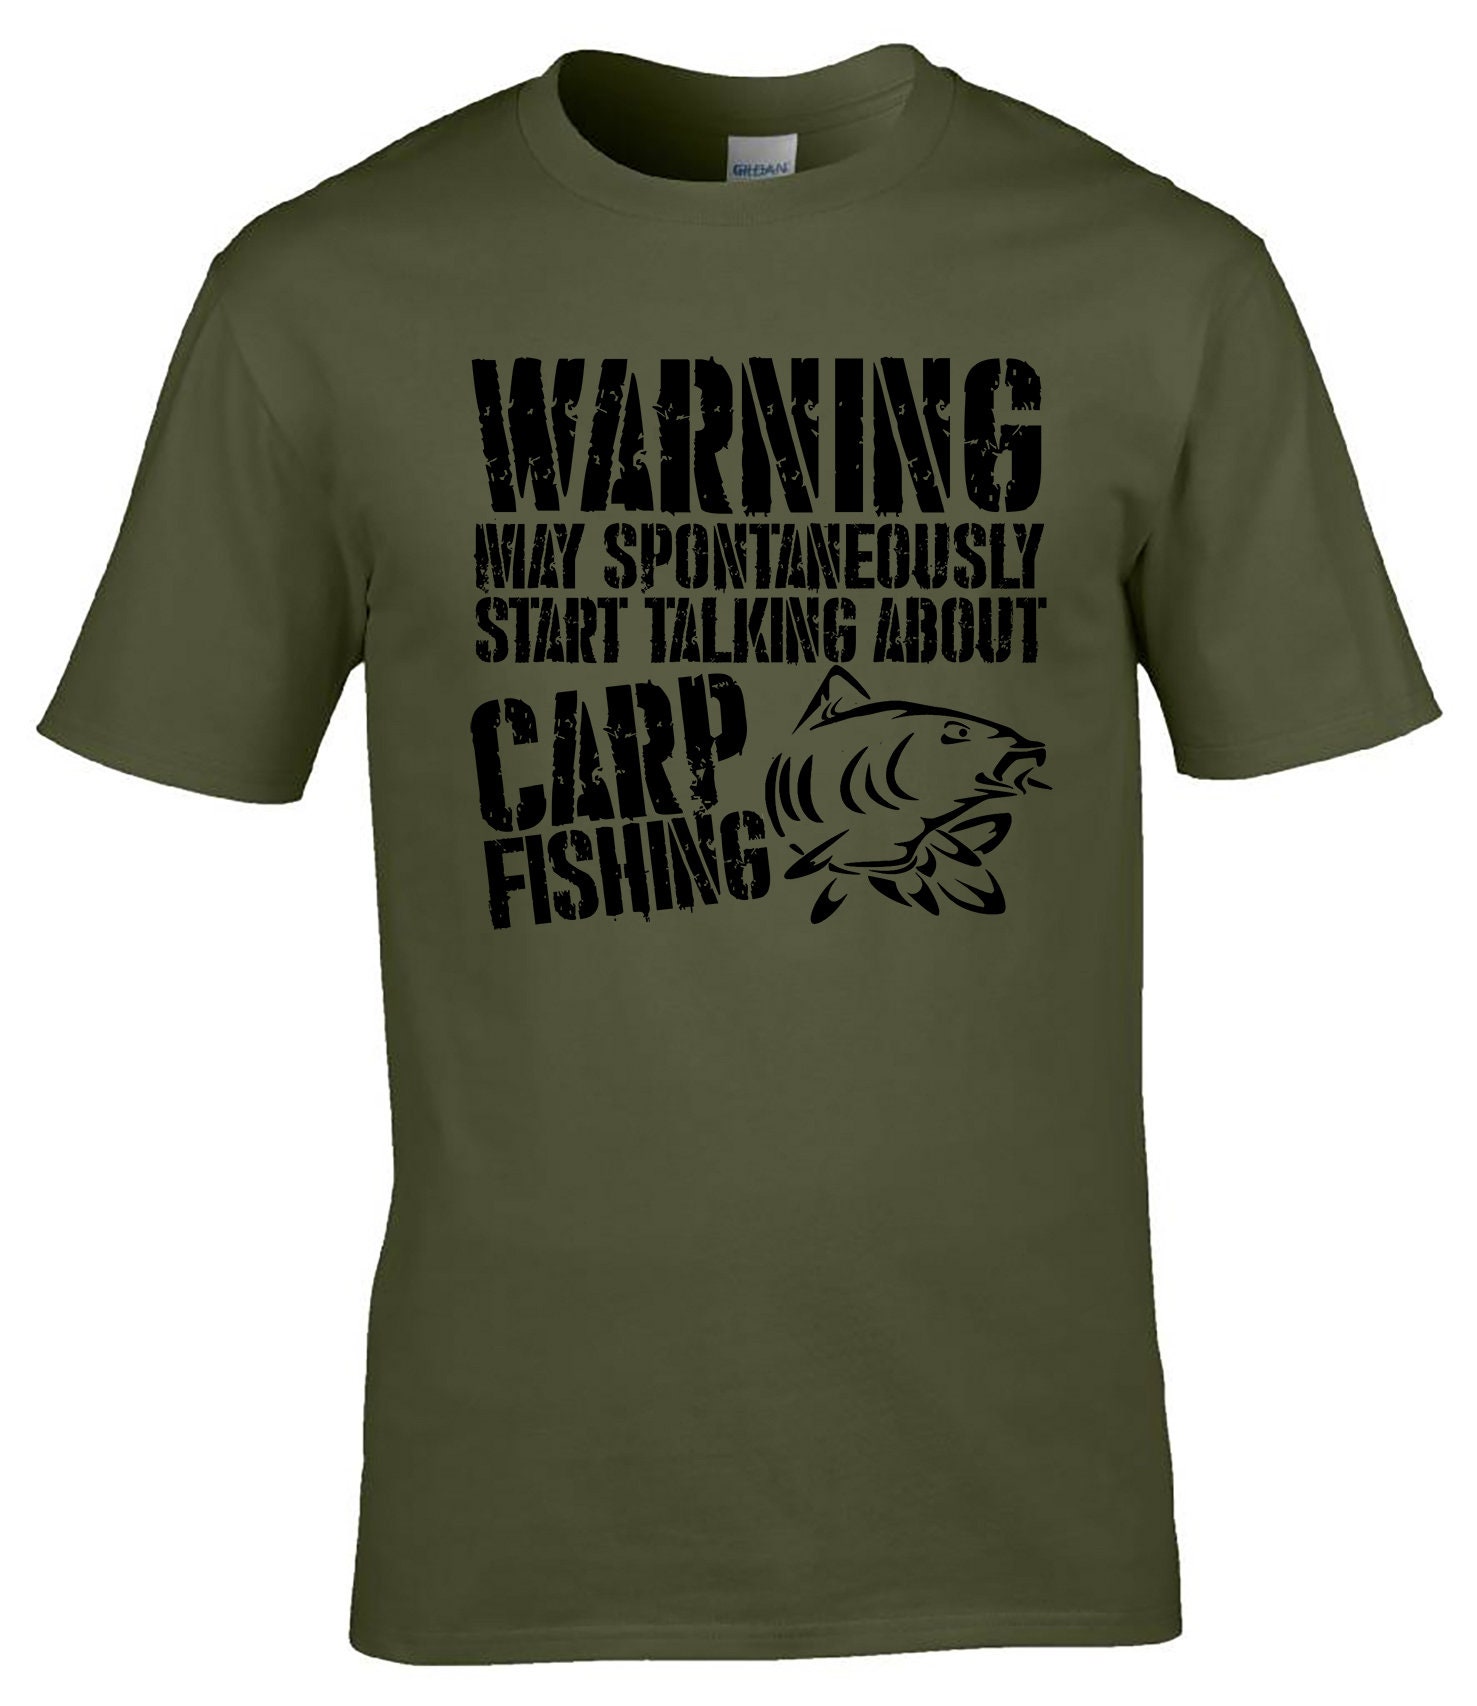 vagt Mærkelig Stat Carp Fishing T-shirt for Men and Women Funny Fishing Shirt - Etsy